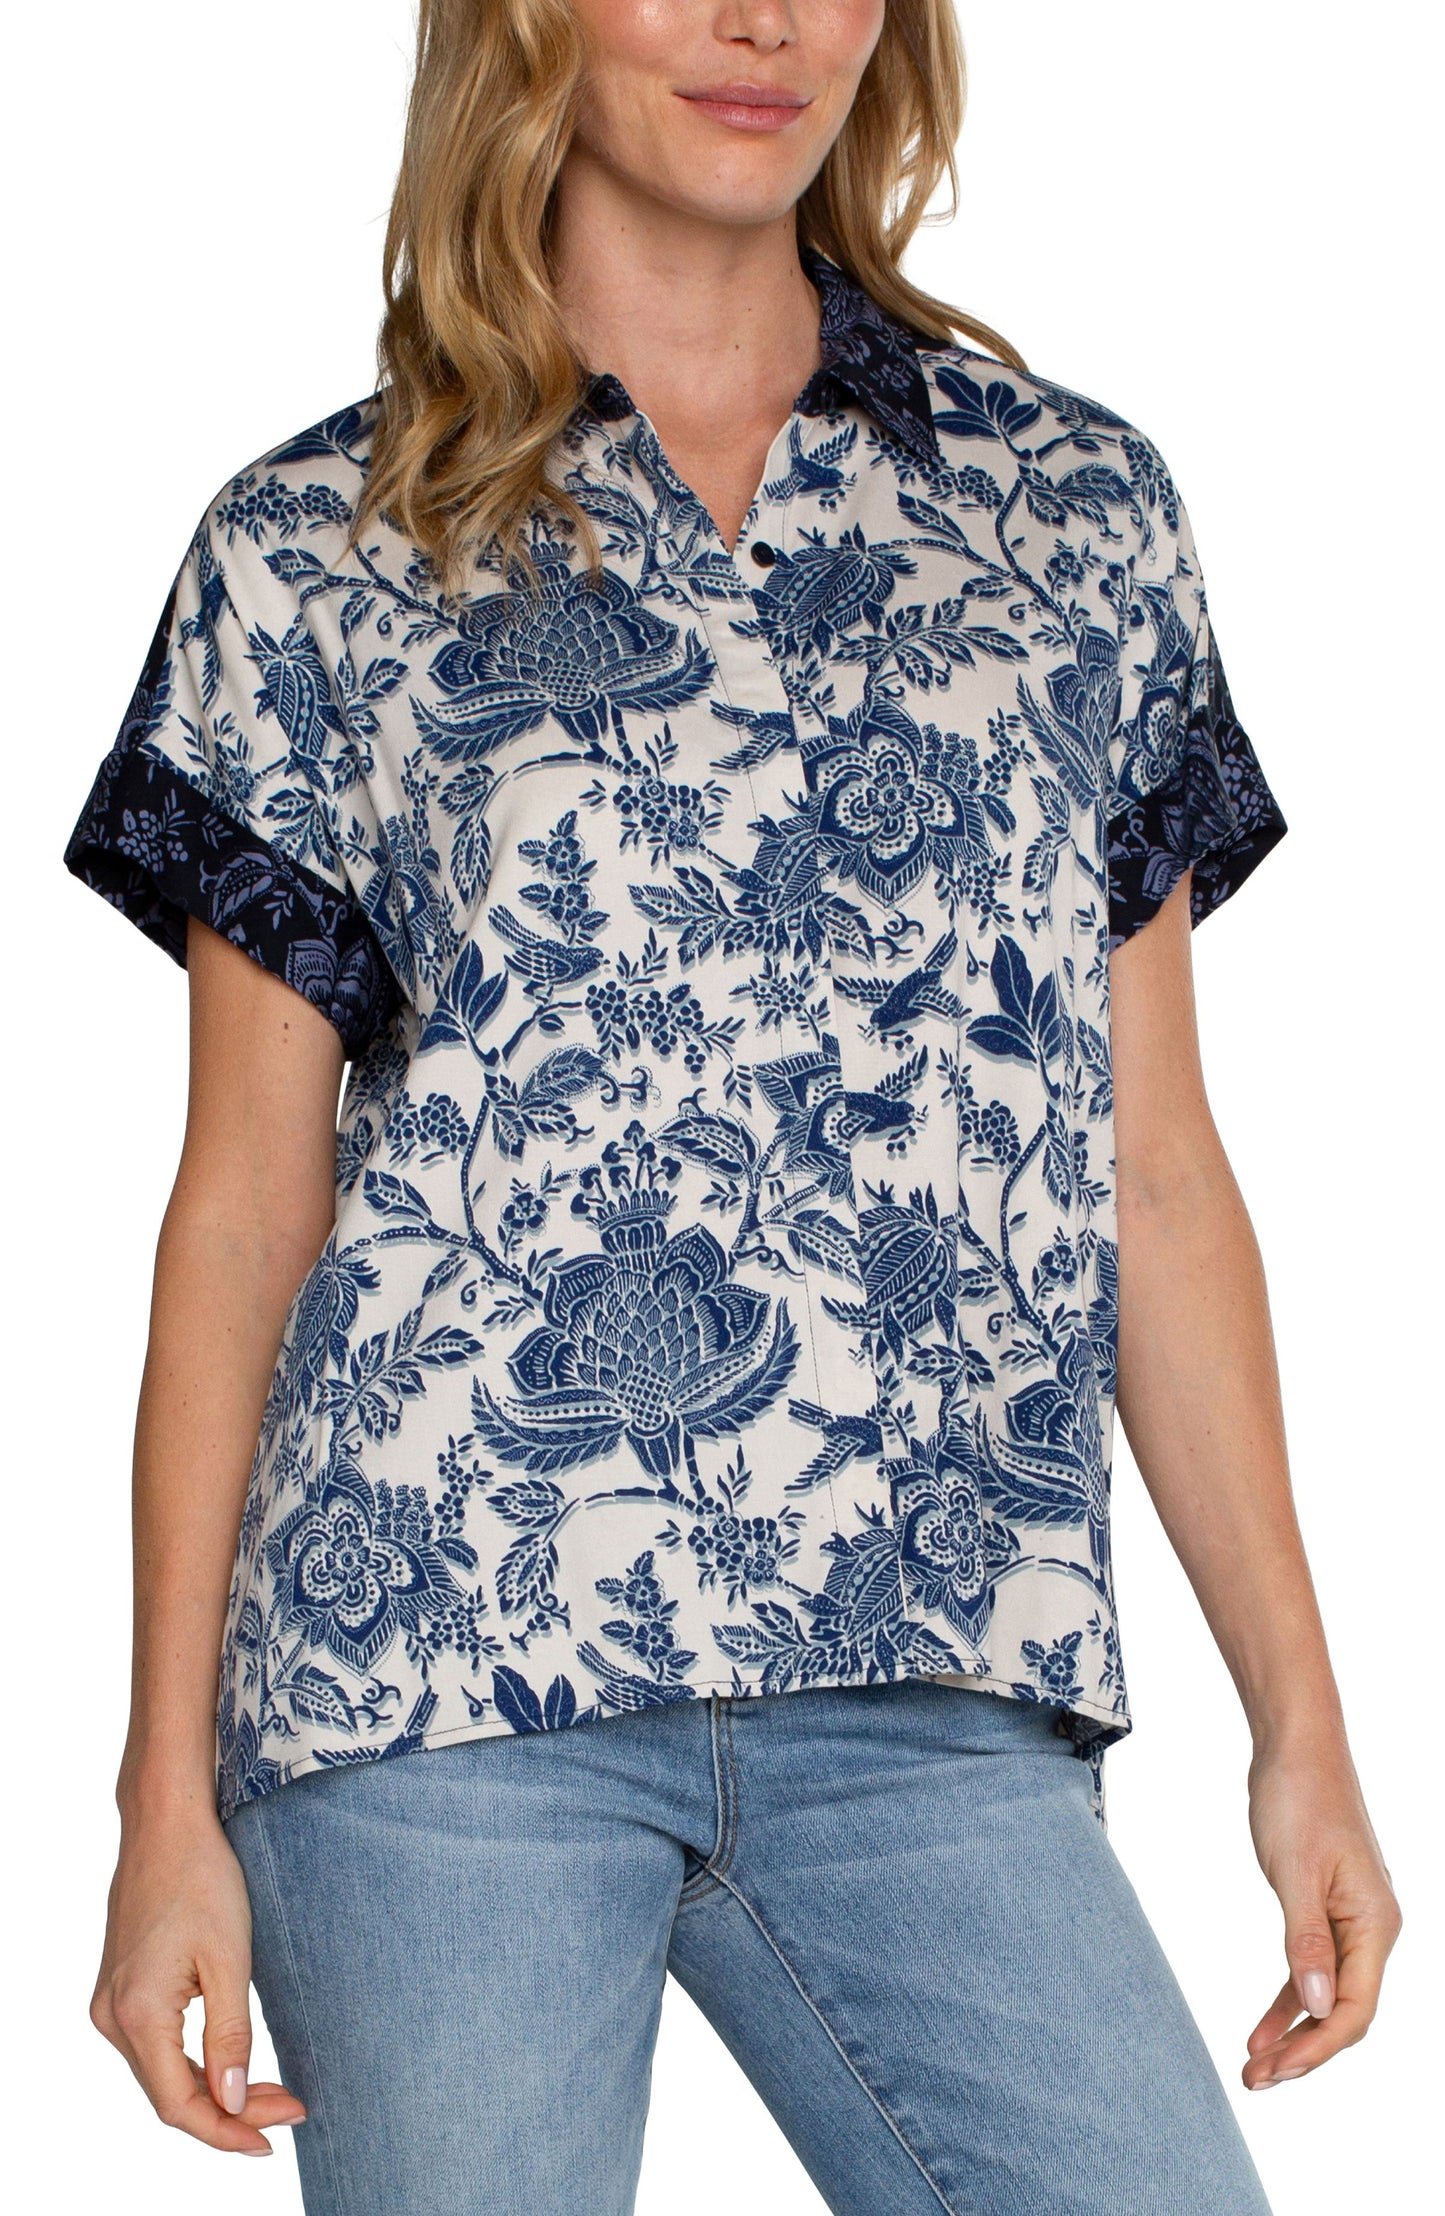 Camp Shirt with Collar and Hi-Low Hem - Galaxy Flower Print